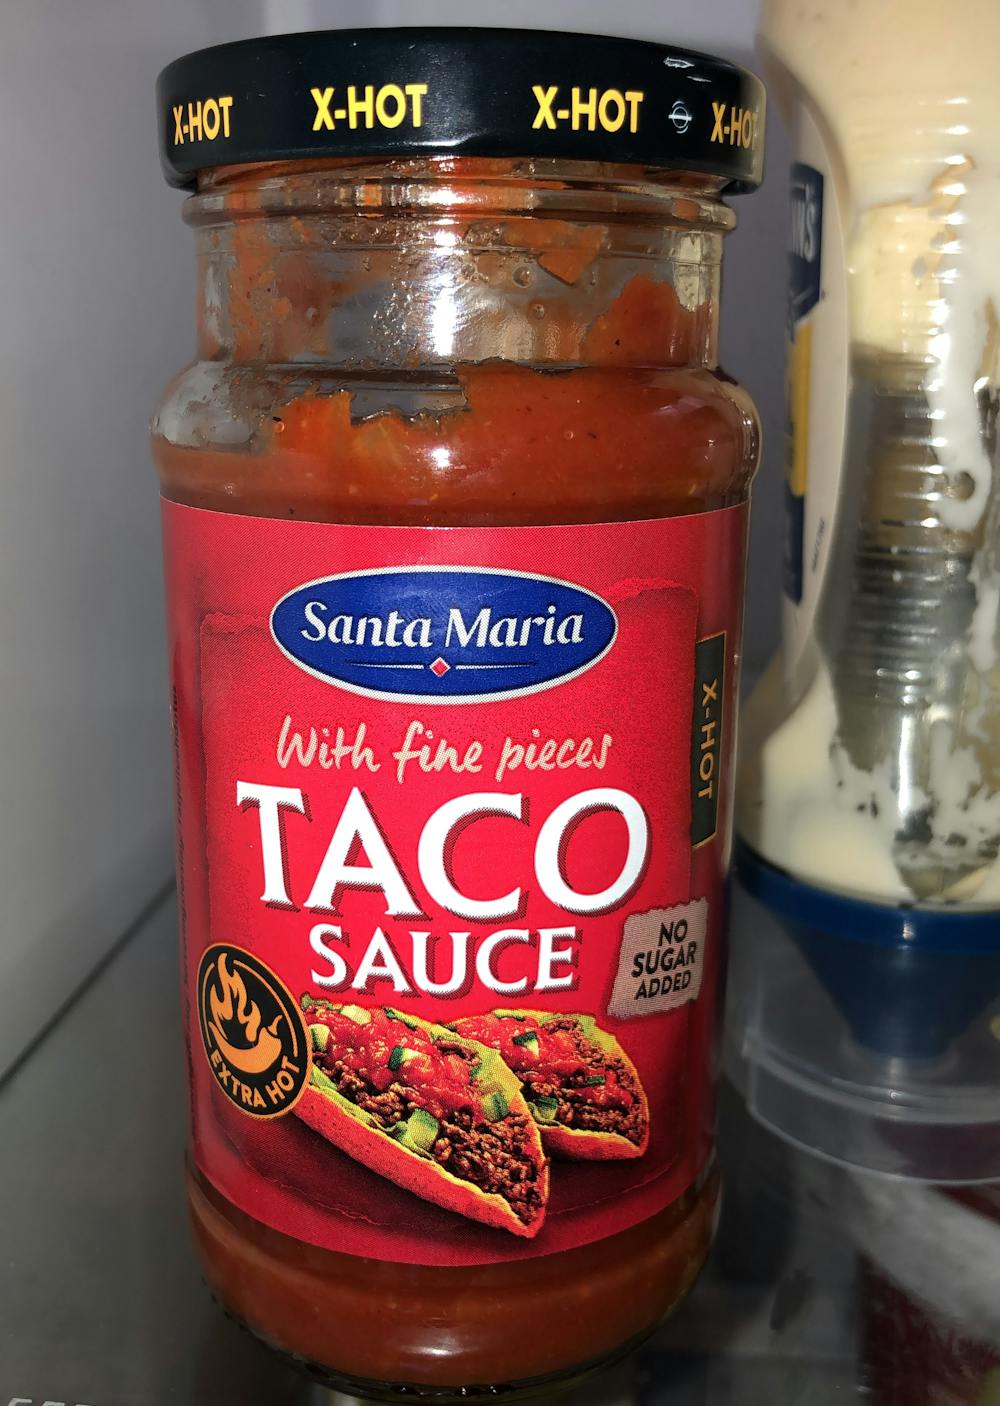 Taco sauce, with fine pieces, Santa Maria